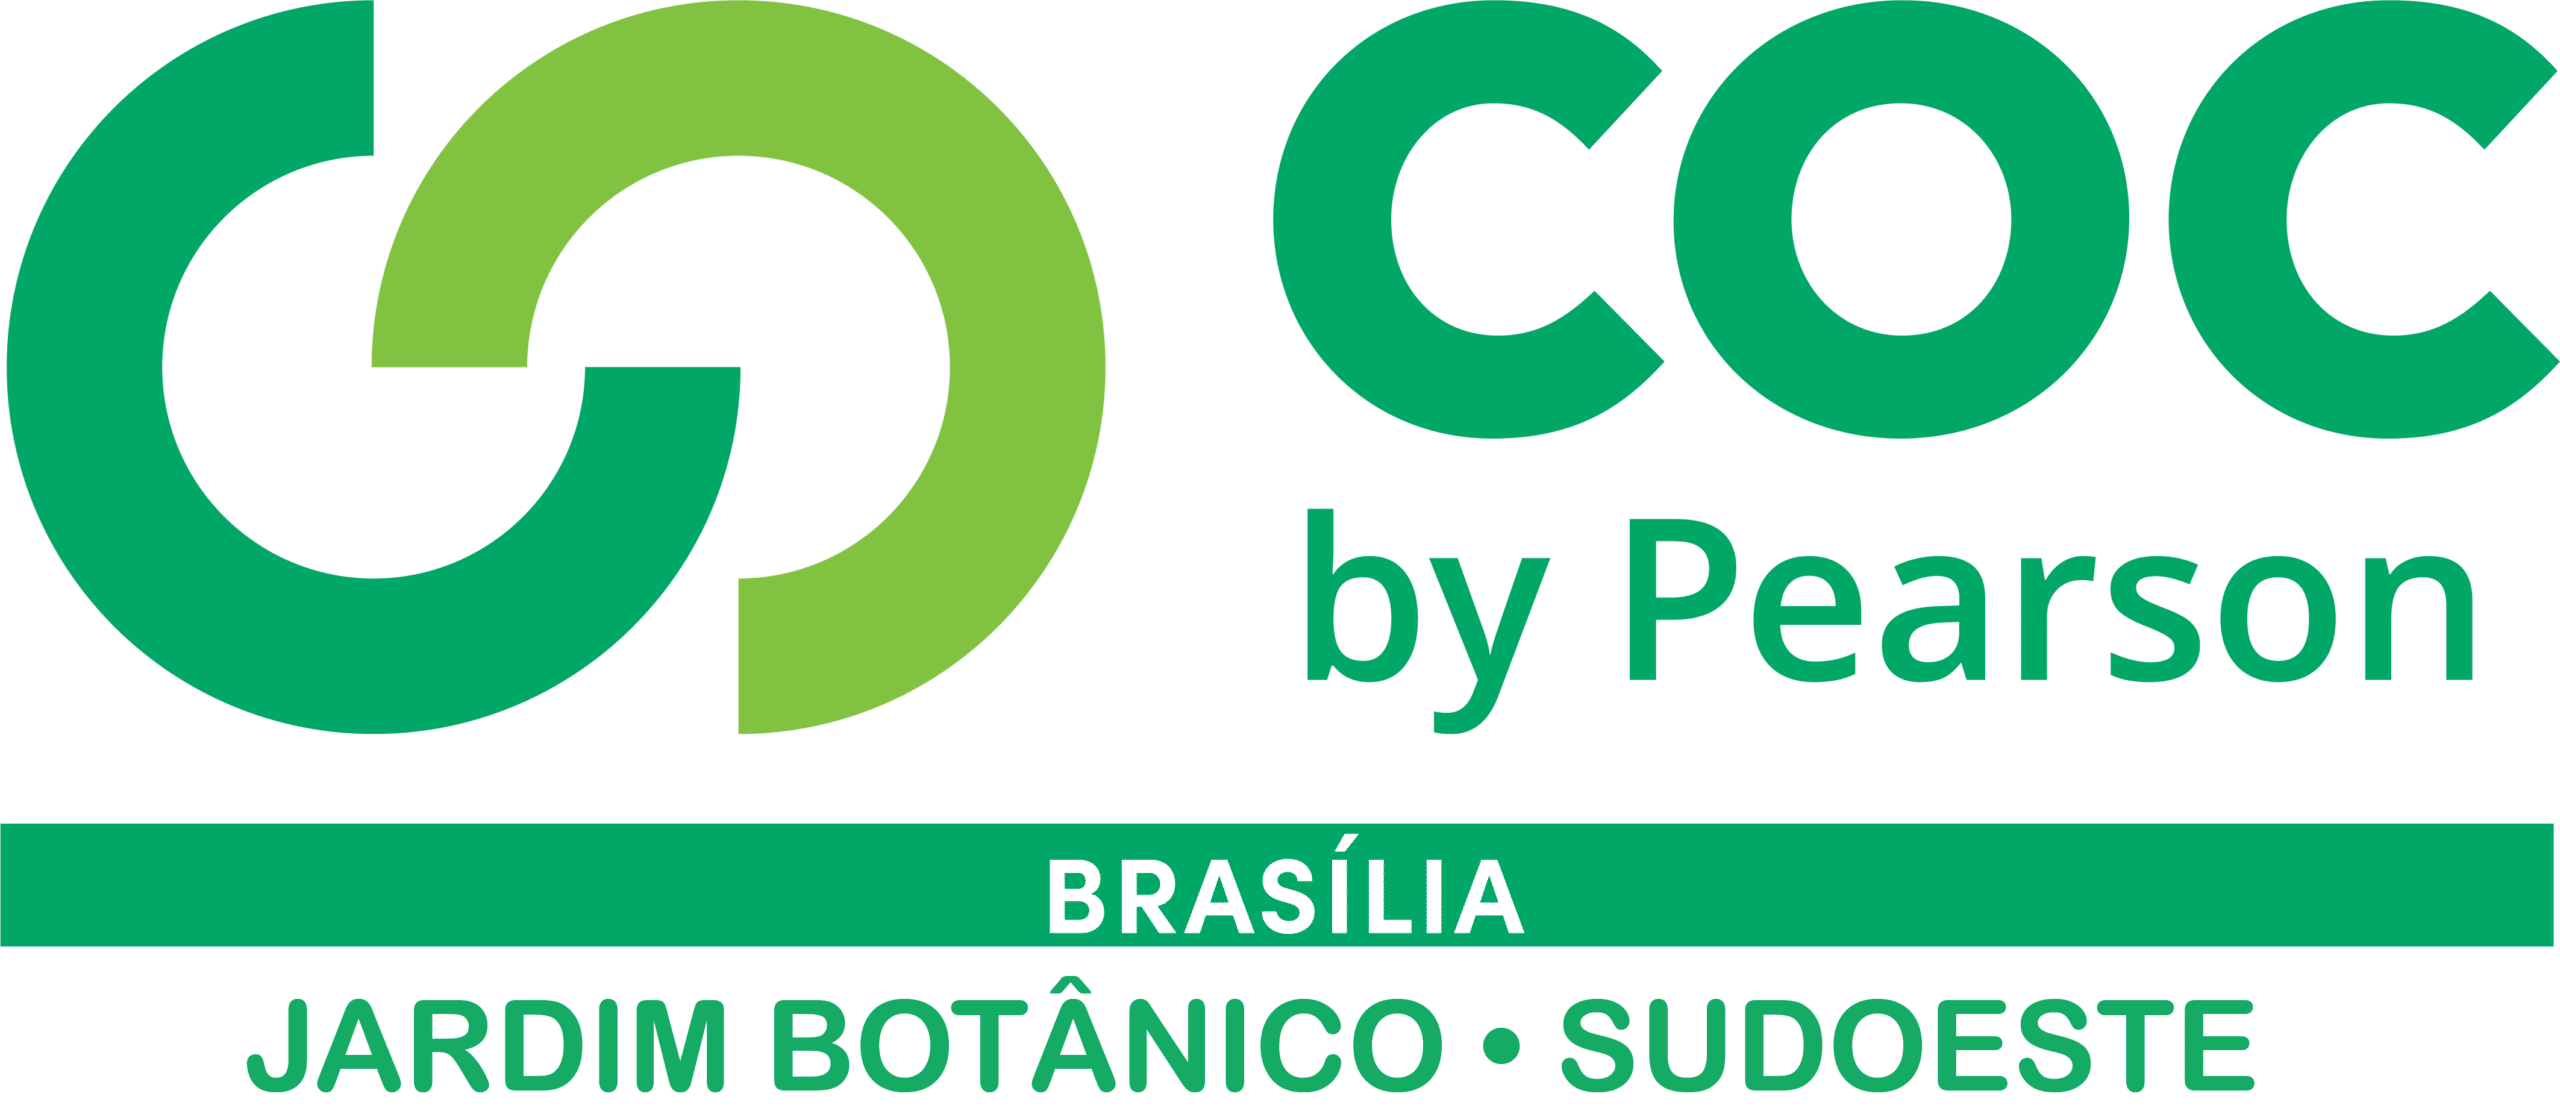 COC-Brasília-2020